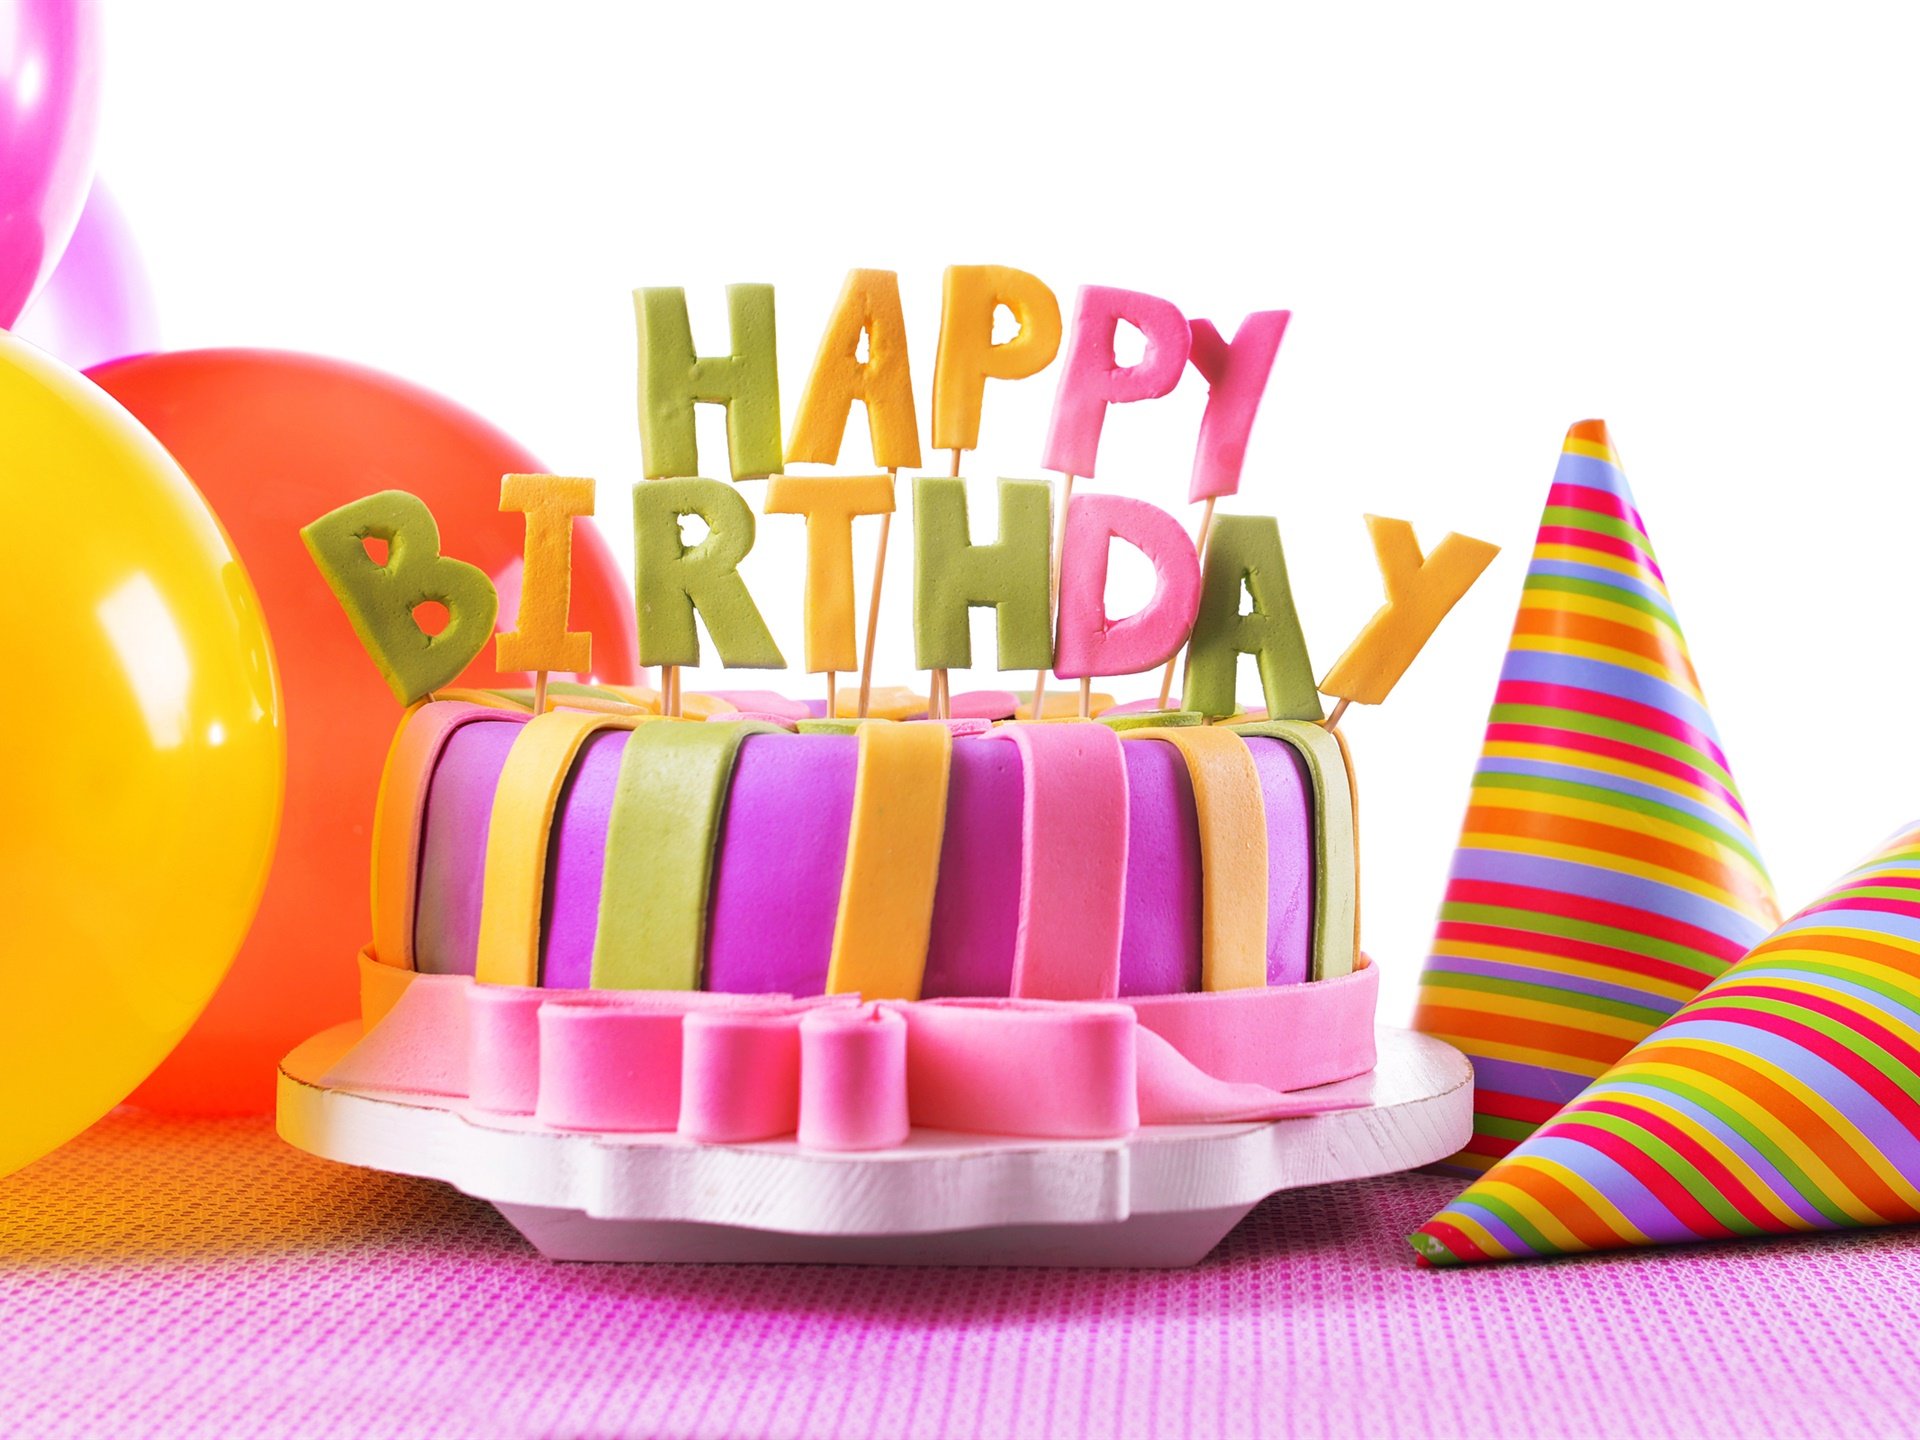 Happy birthday junior images 👉 👌 Happy Birthday! Happy birth